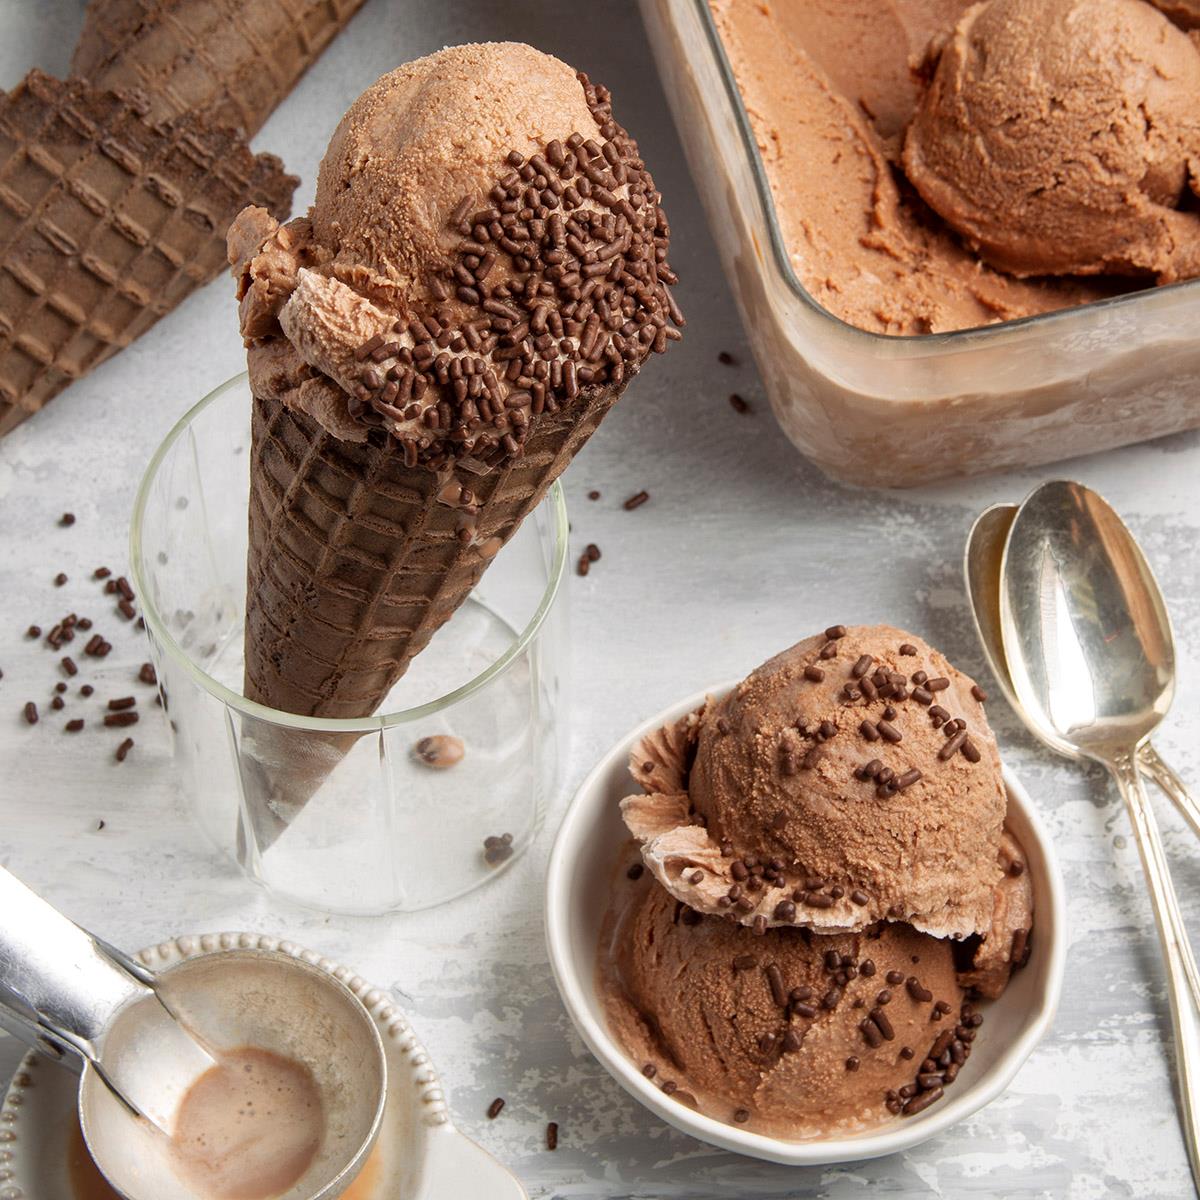 How To Make Chocolate Ice Cream With An Ice Cream Maker